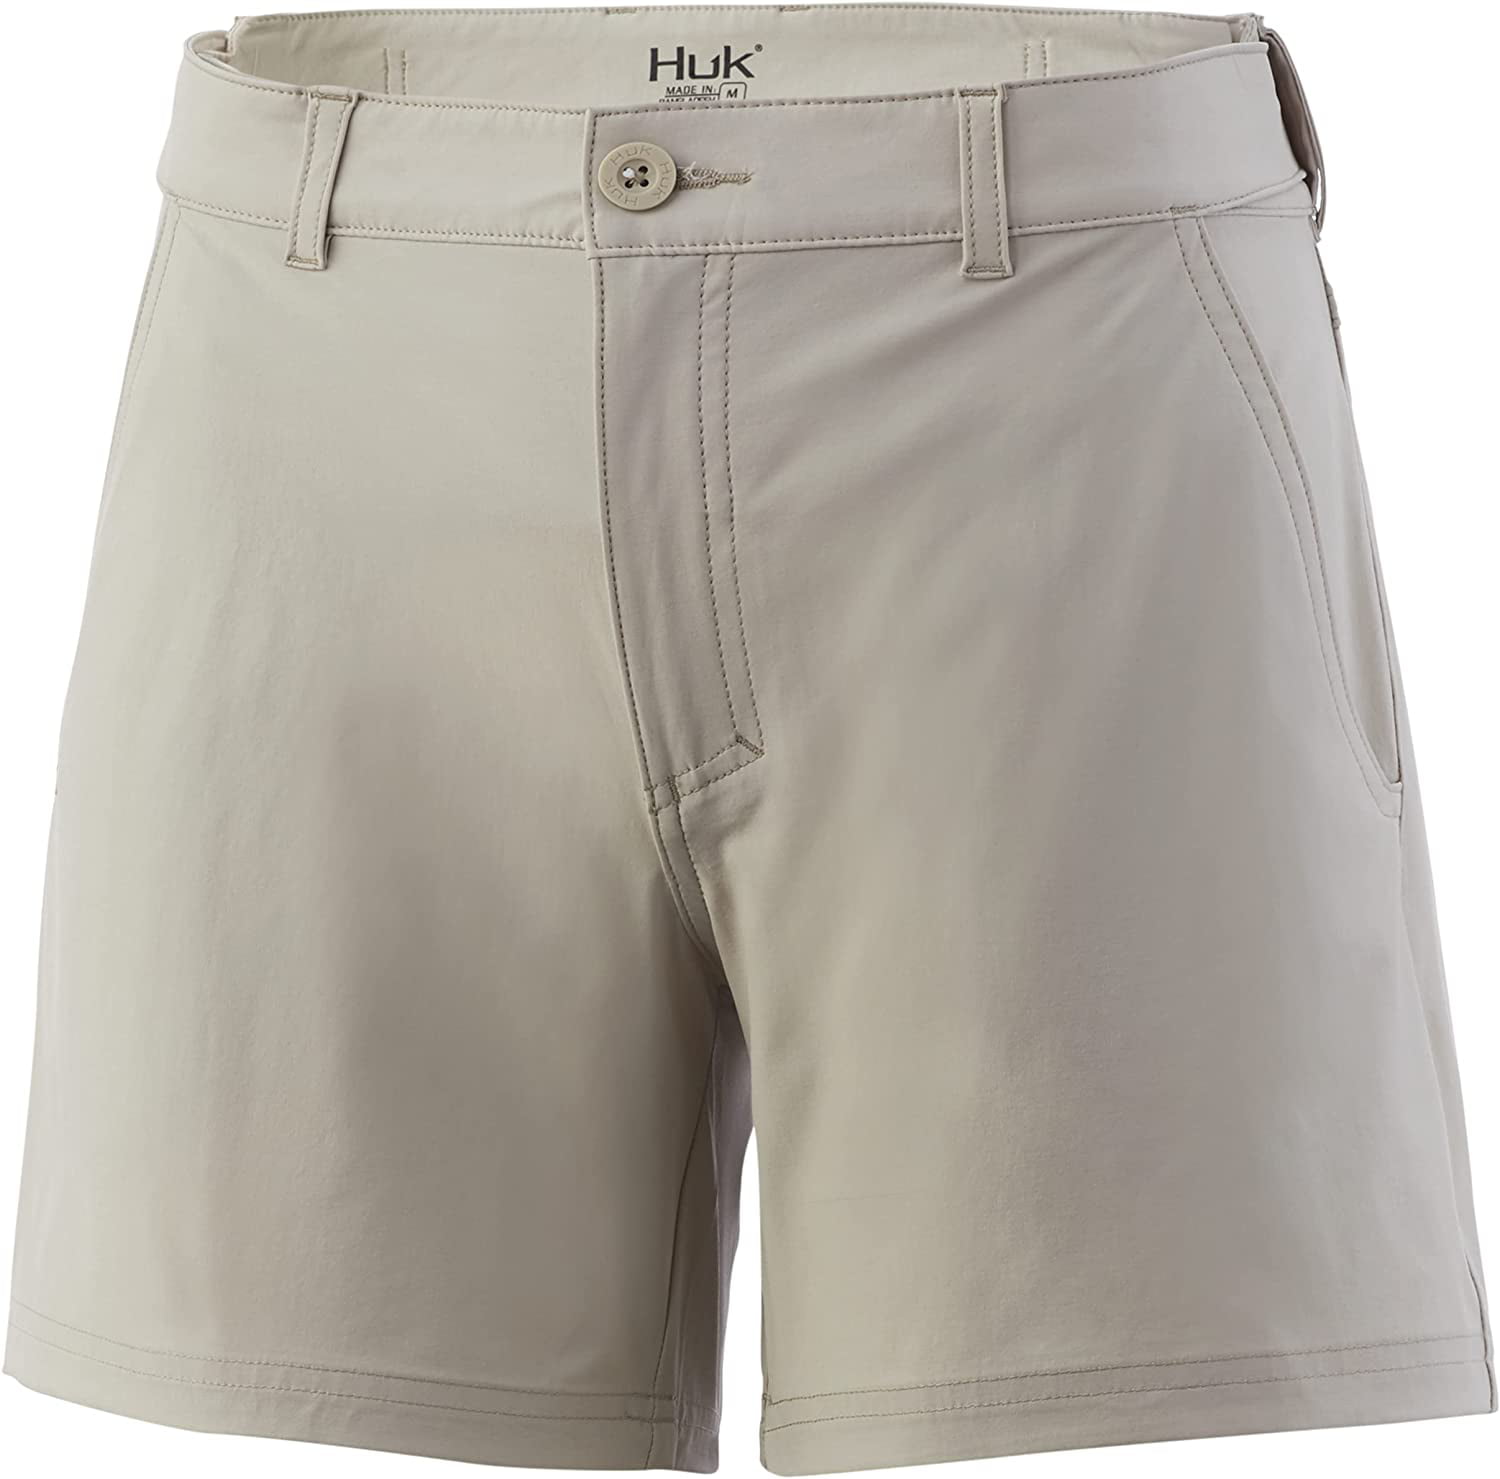 Huk Fishing Shorts Adult Medium Black Cargo Zip Pockets Stretch